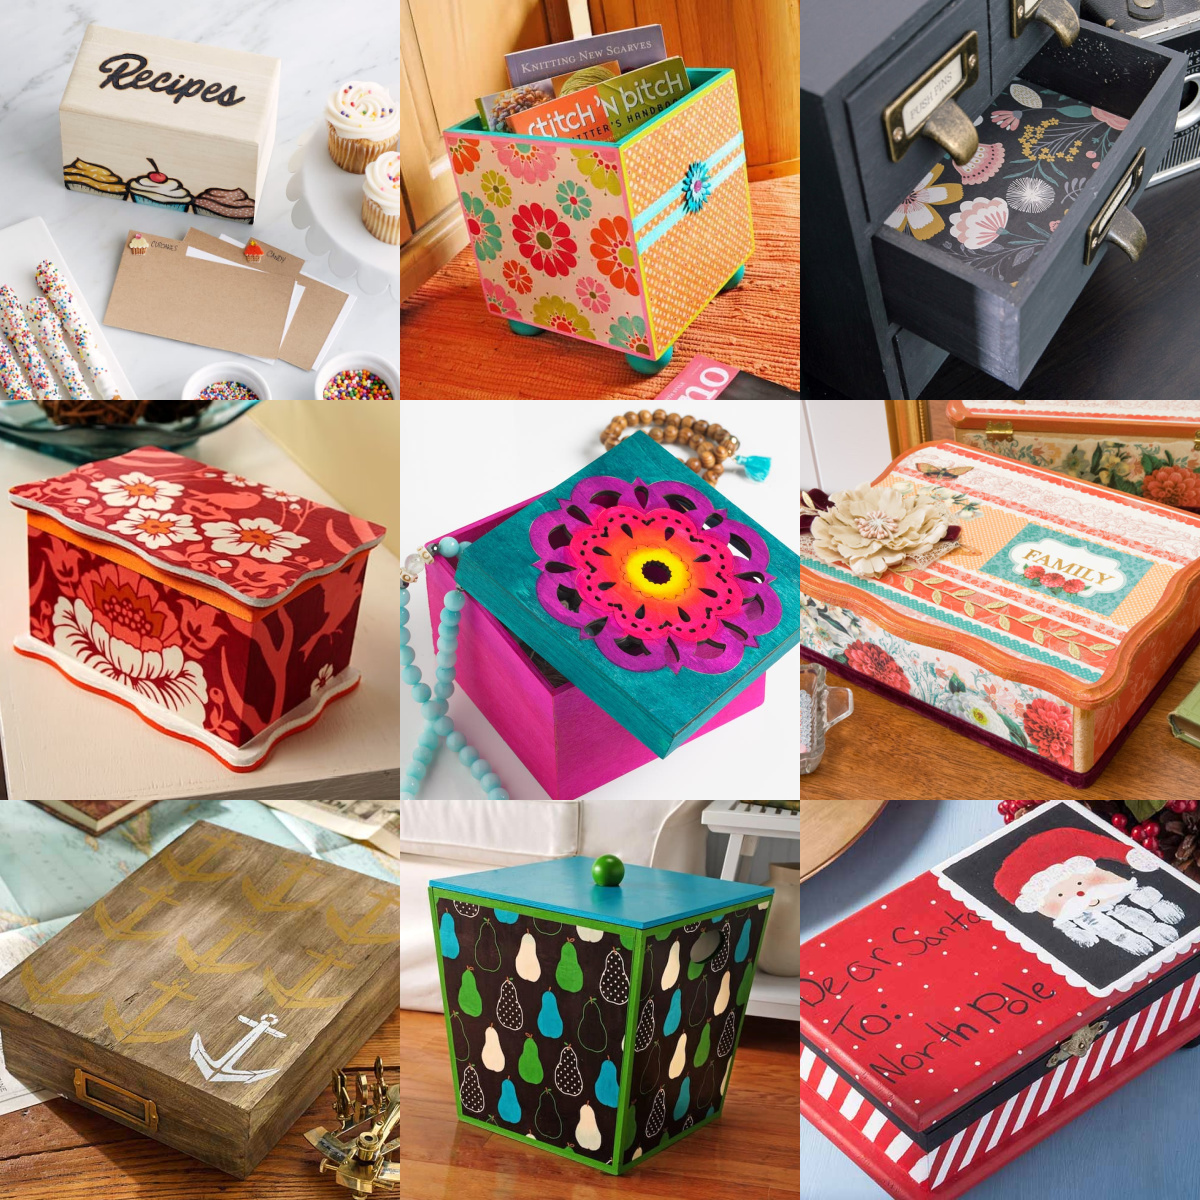 25+ Wood Box Crafts for Home Decorating - Mod Podge Rocks